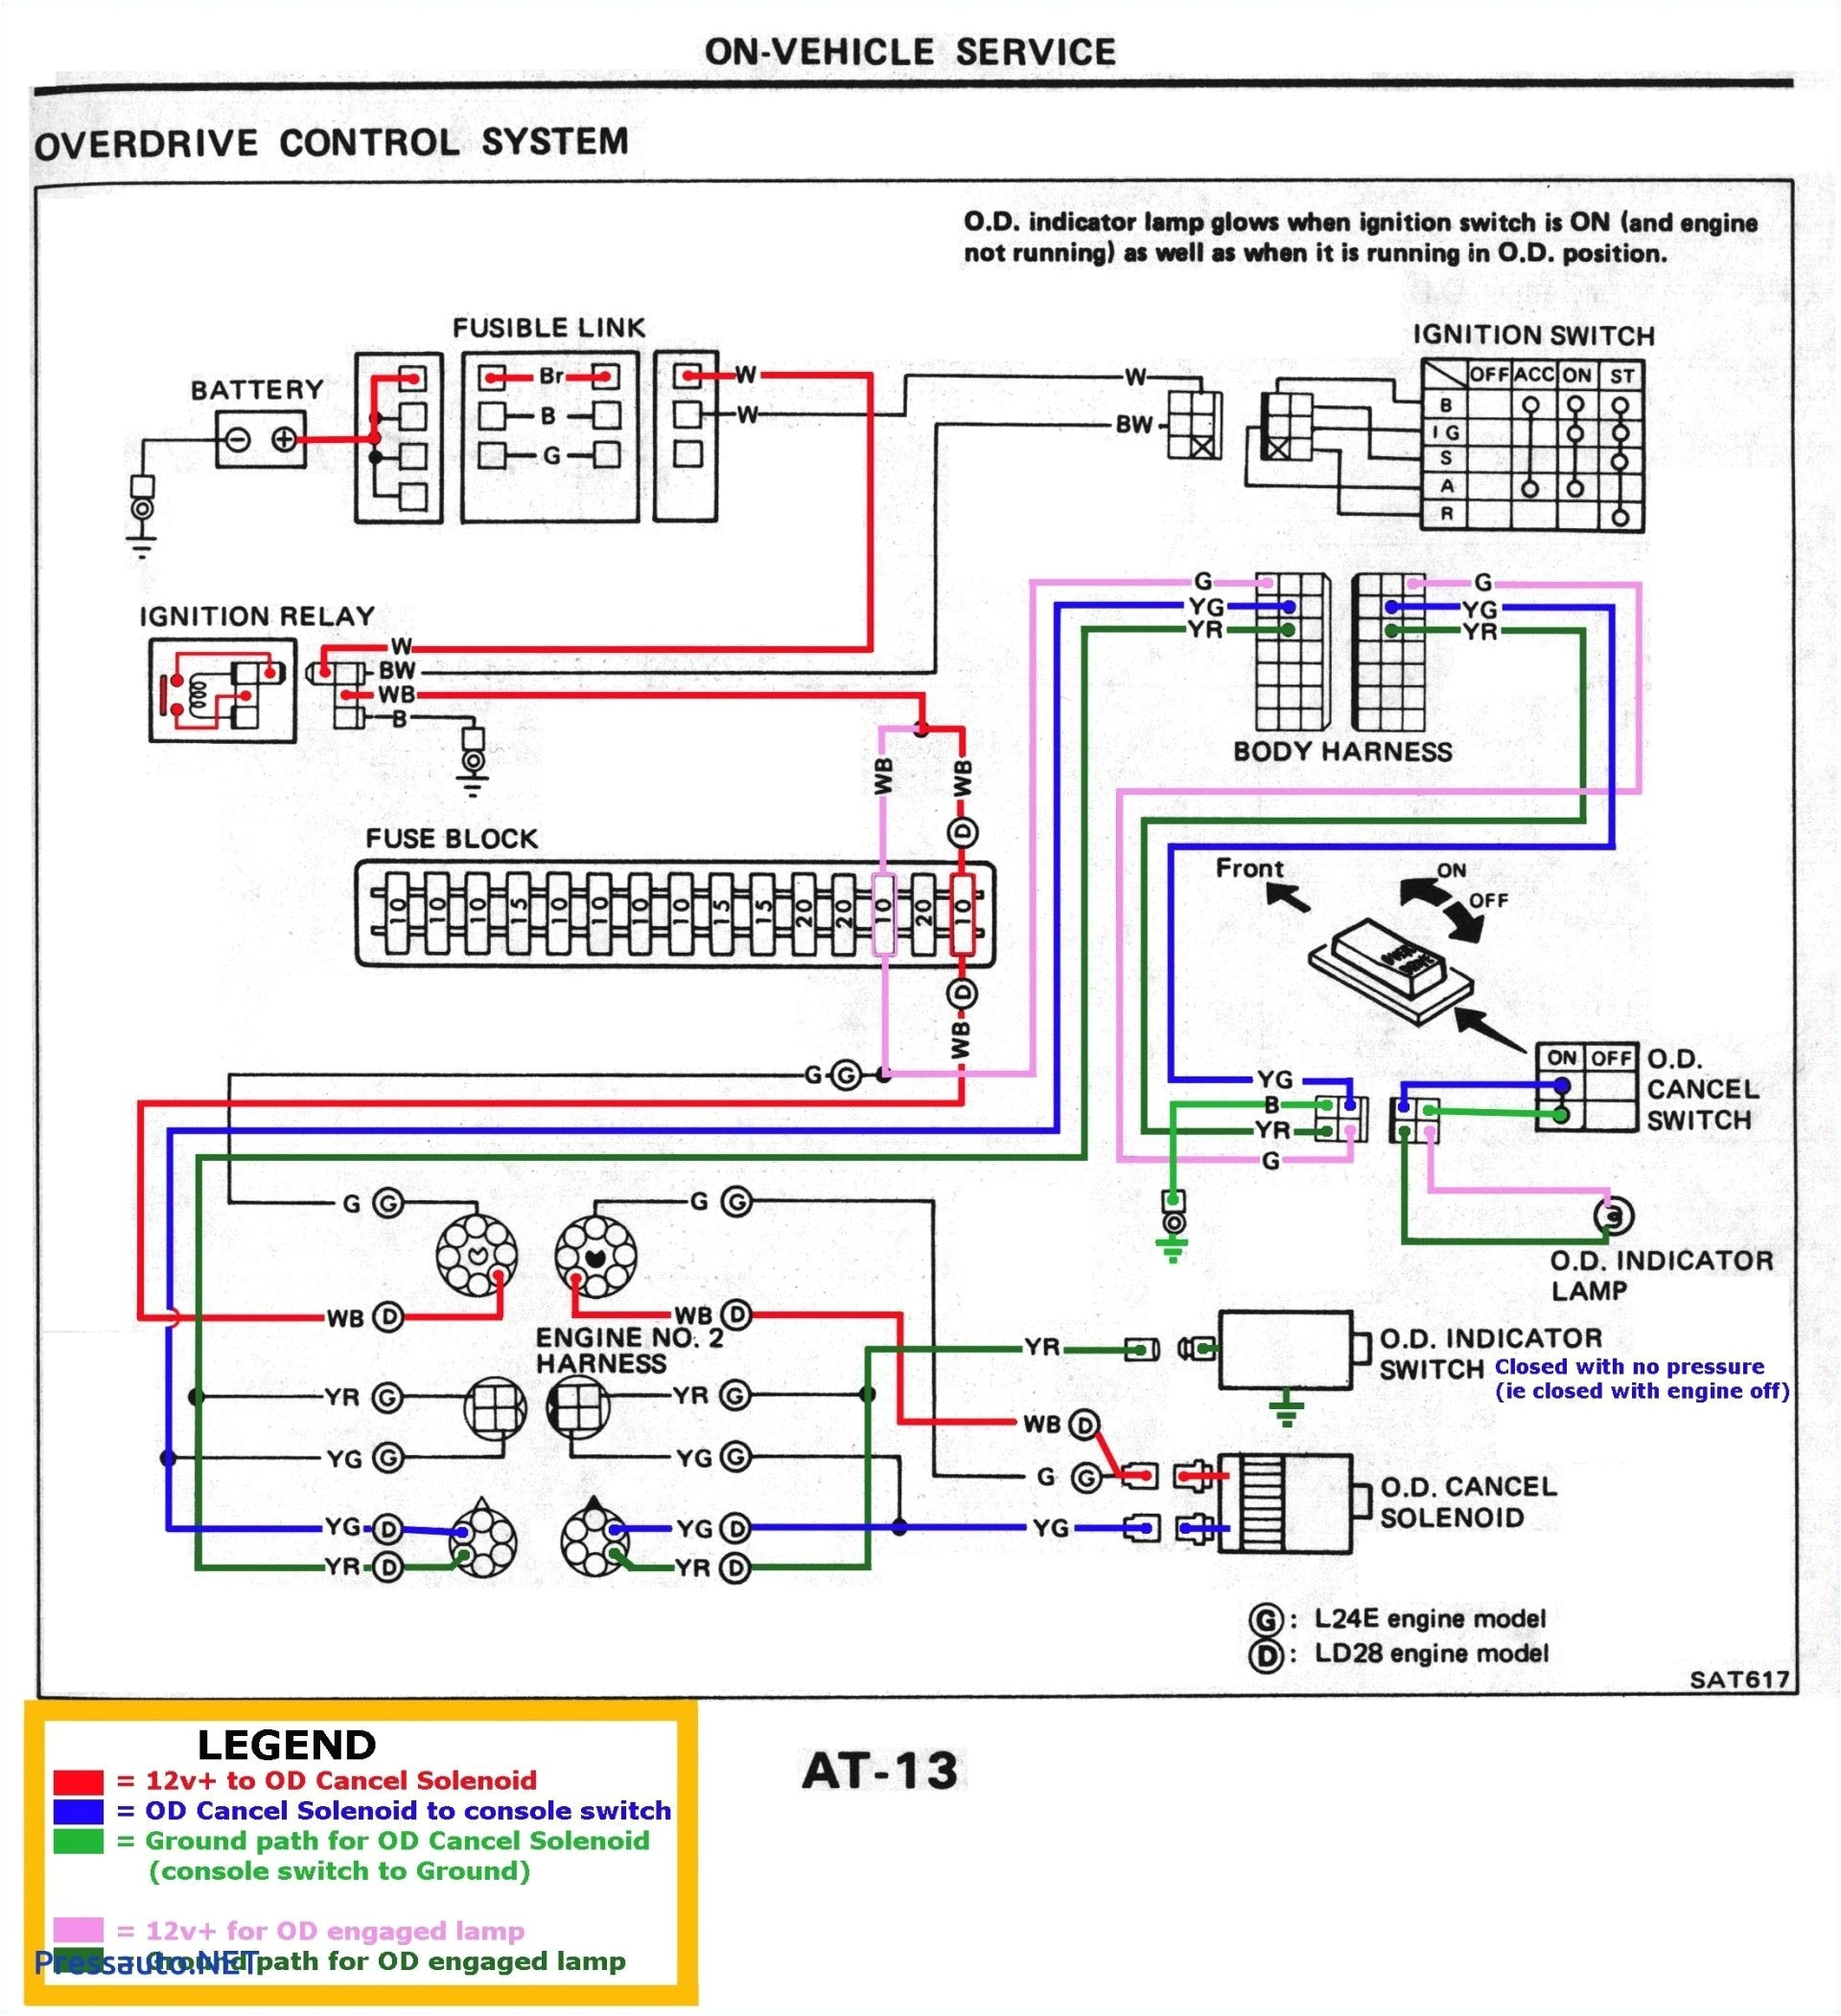 belimo wiring diagram schema diagram databasebelimo actuator wiring floater wiring diagram priv belimo lmb24 3 t